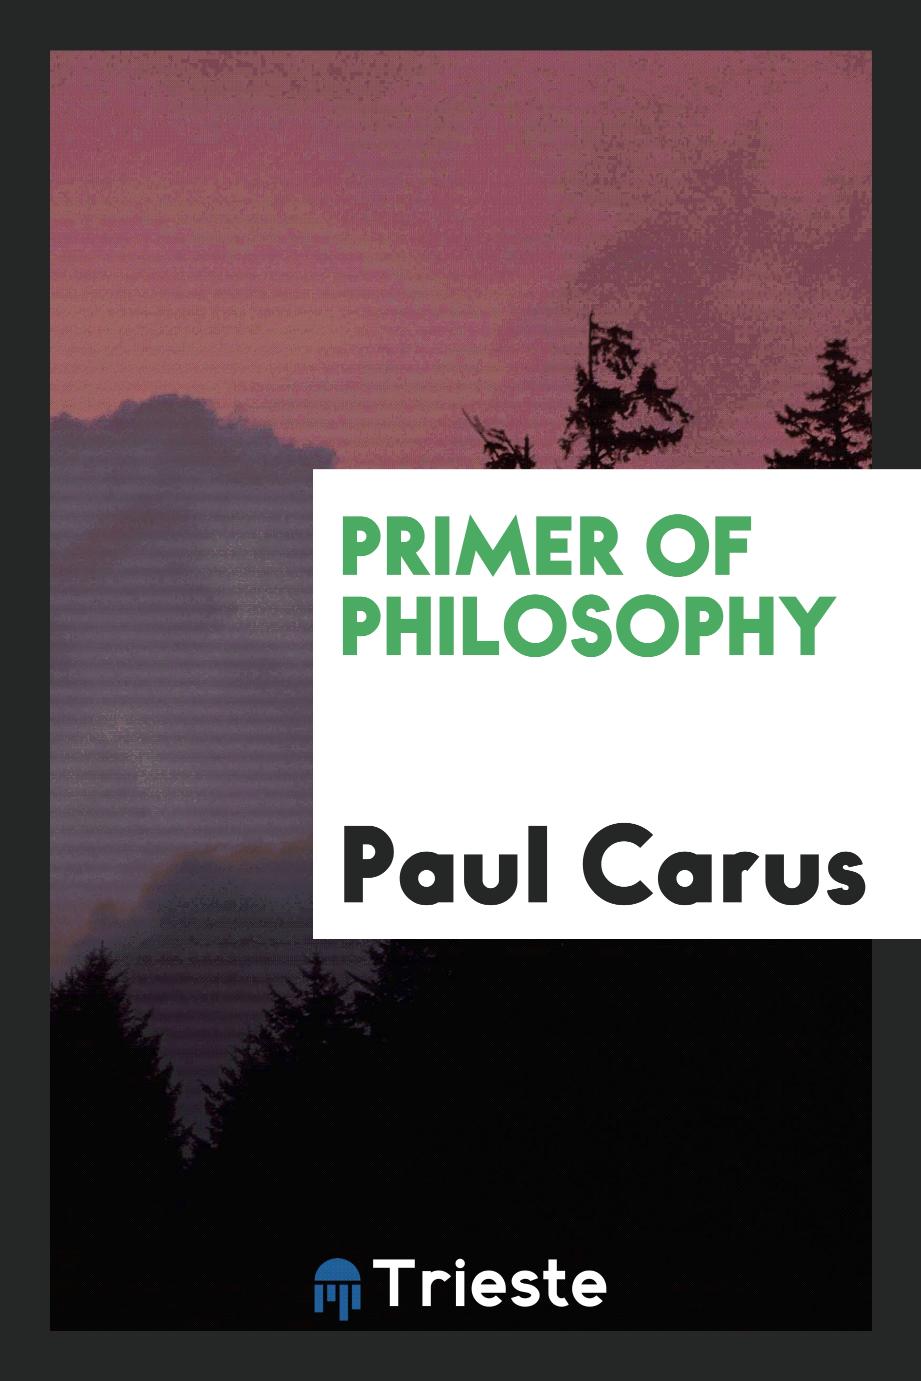 Primer of philosophy